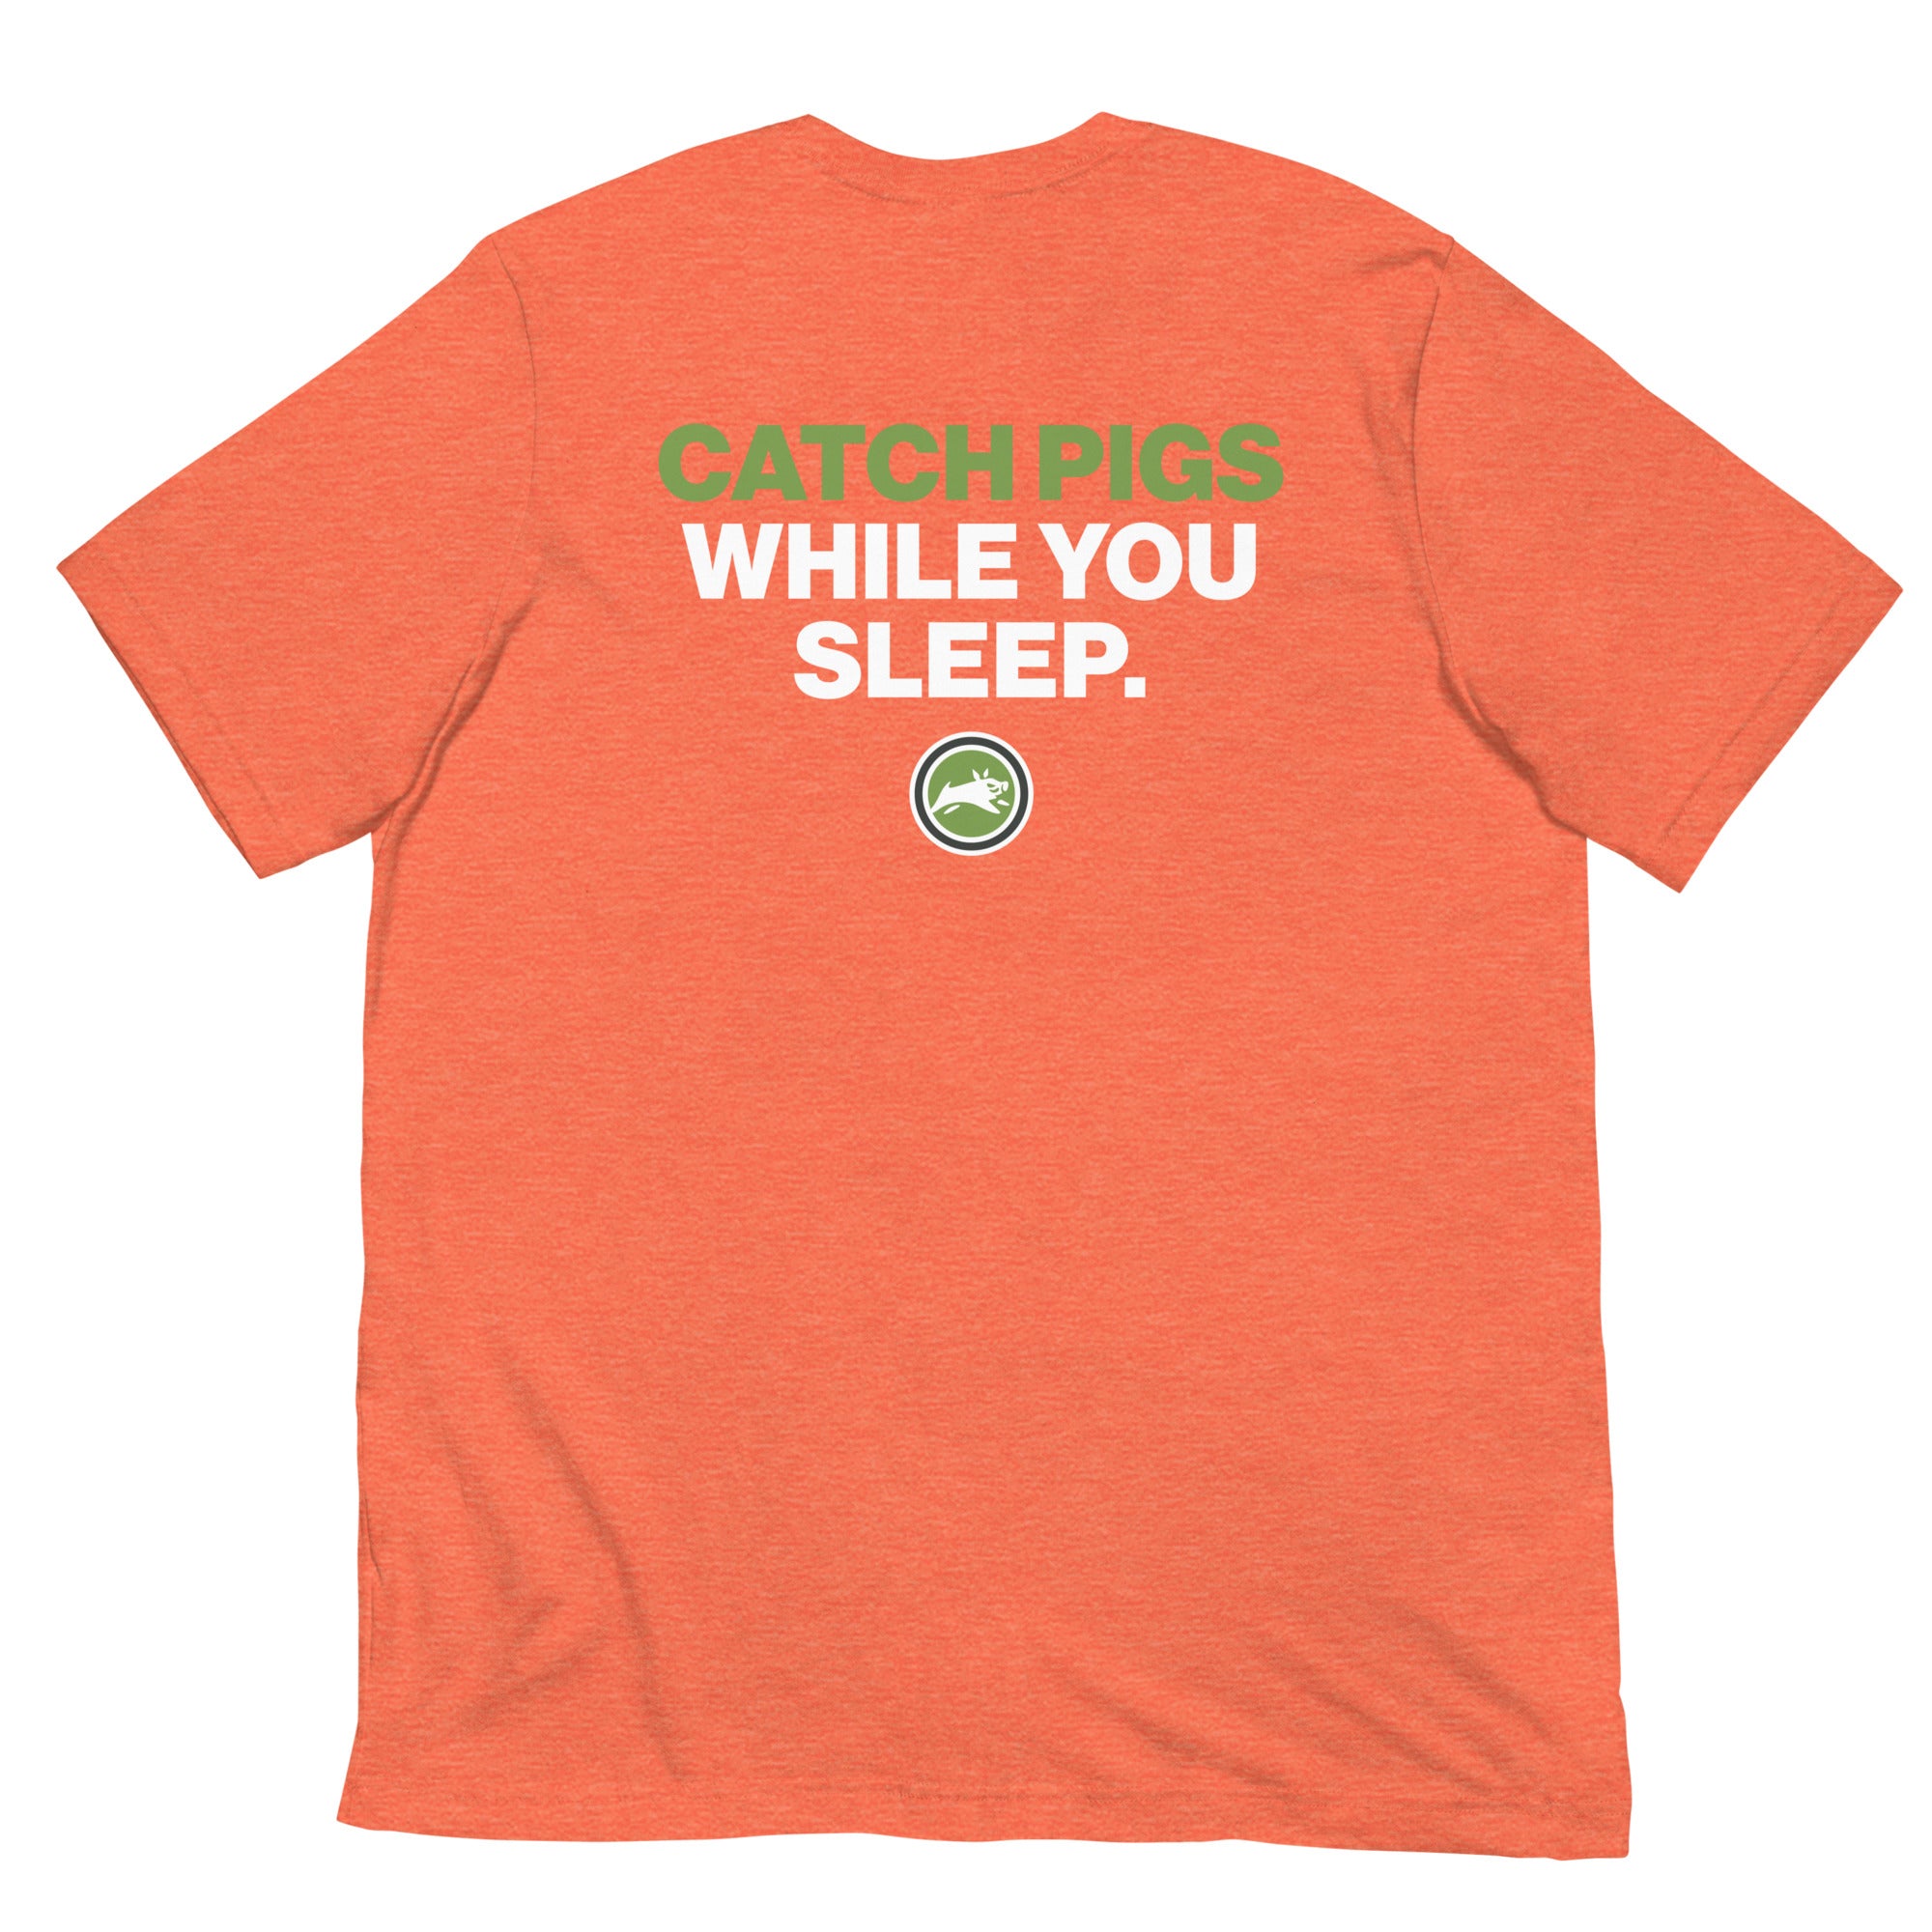 Catch Pigs While You Sleep - Short-Sleeve Unisex T-Shirt